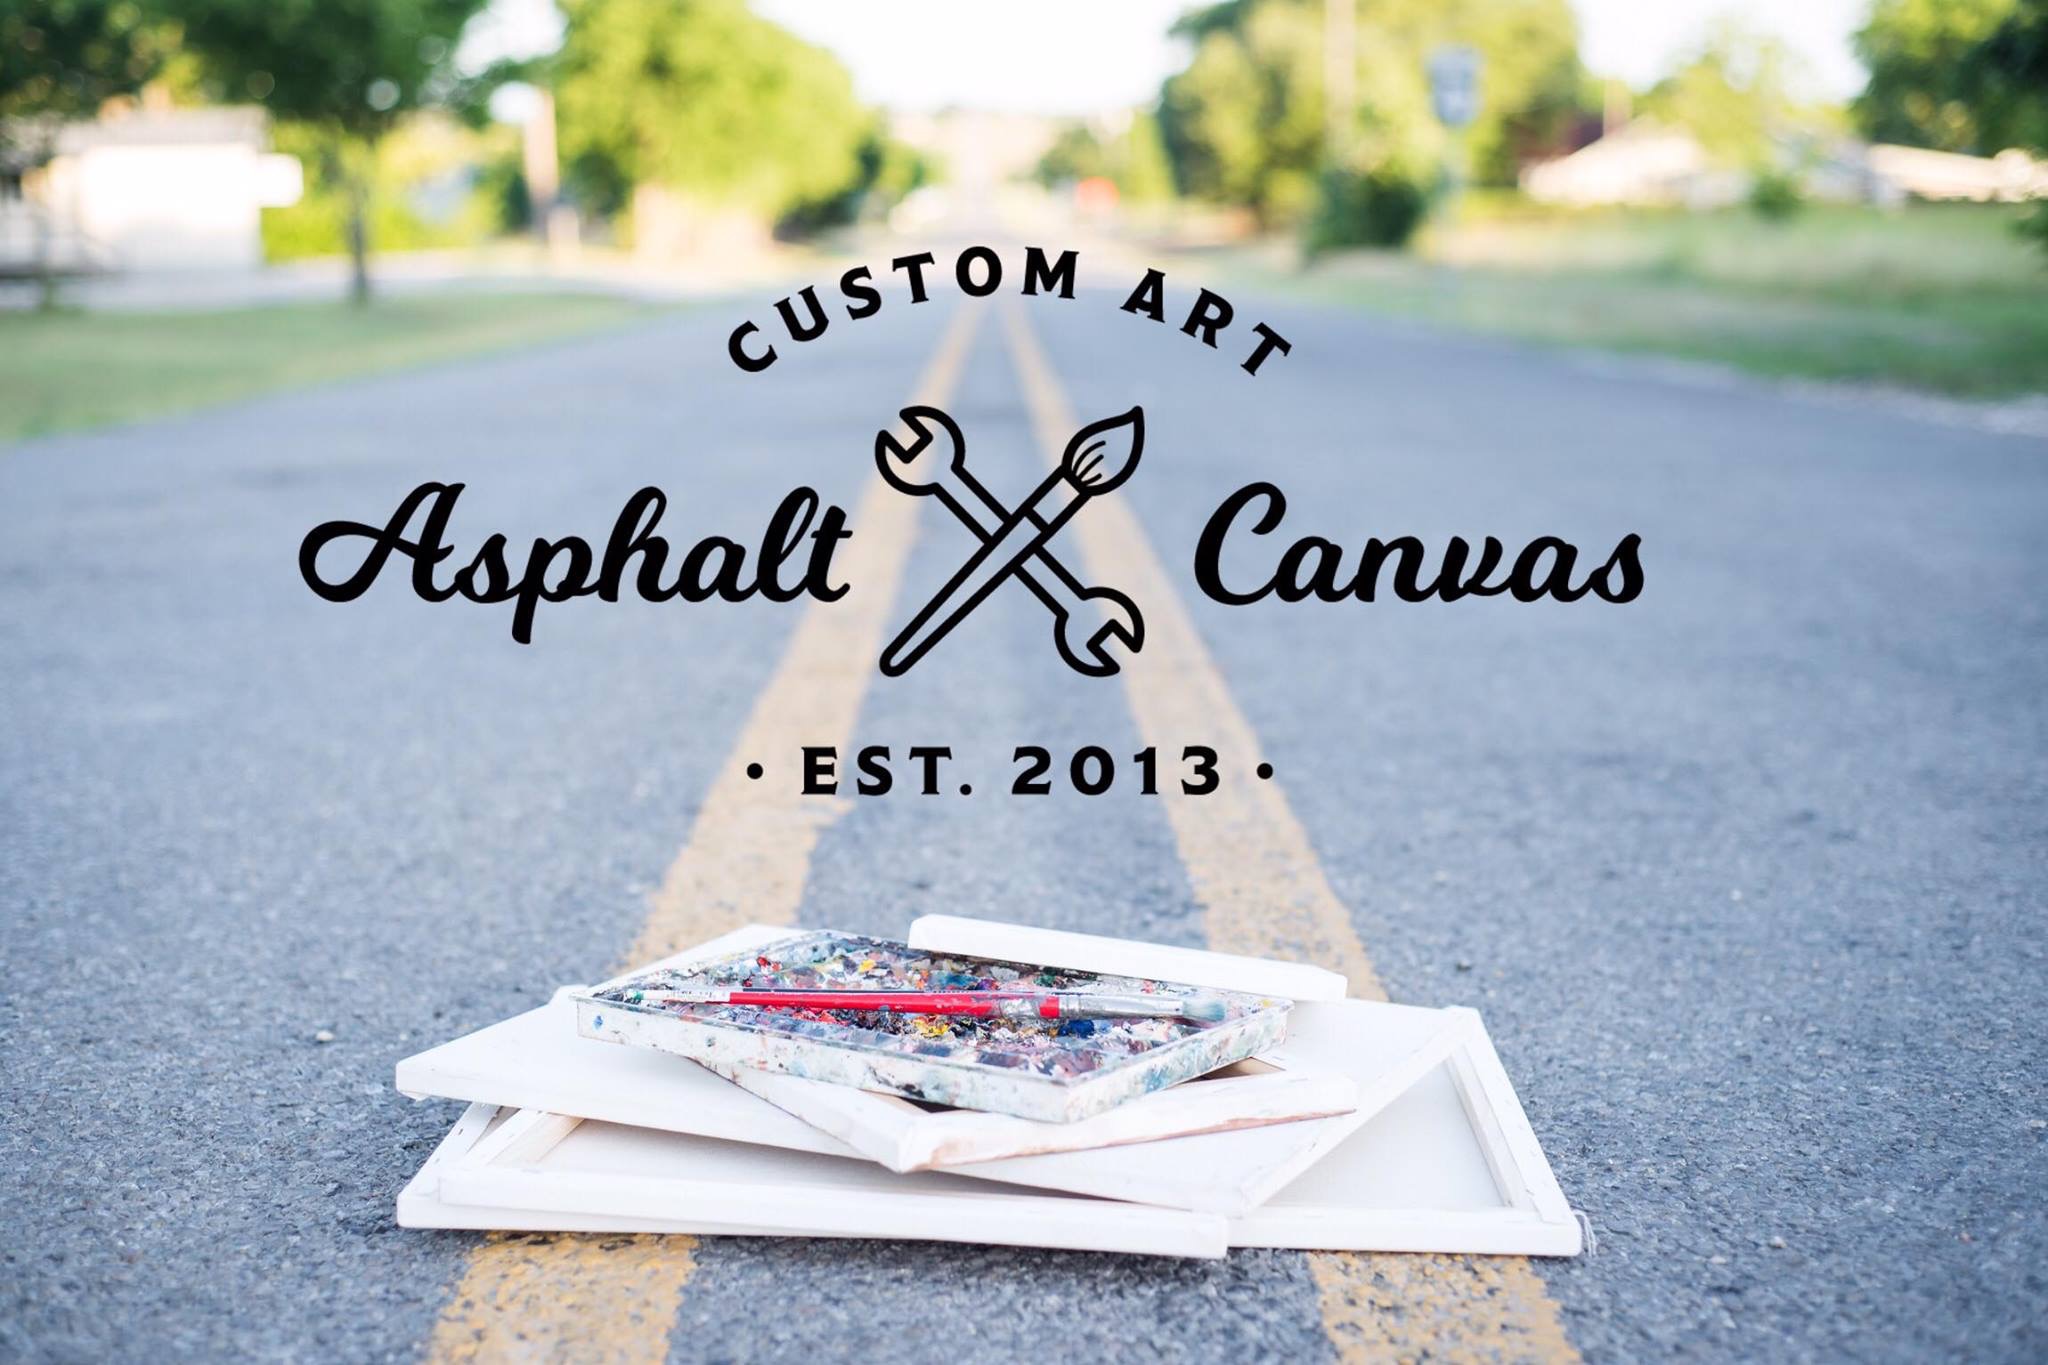 What's Inside My Art Tool Box? The Check List! - Asphalt Canvas Custom Art